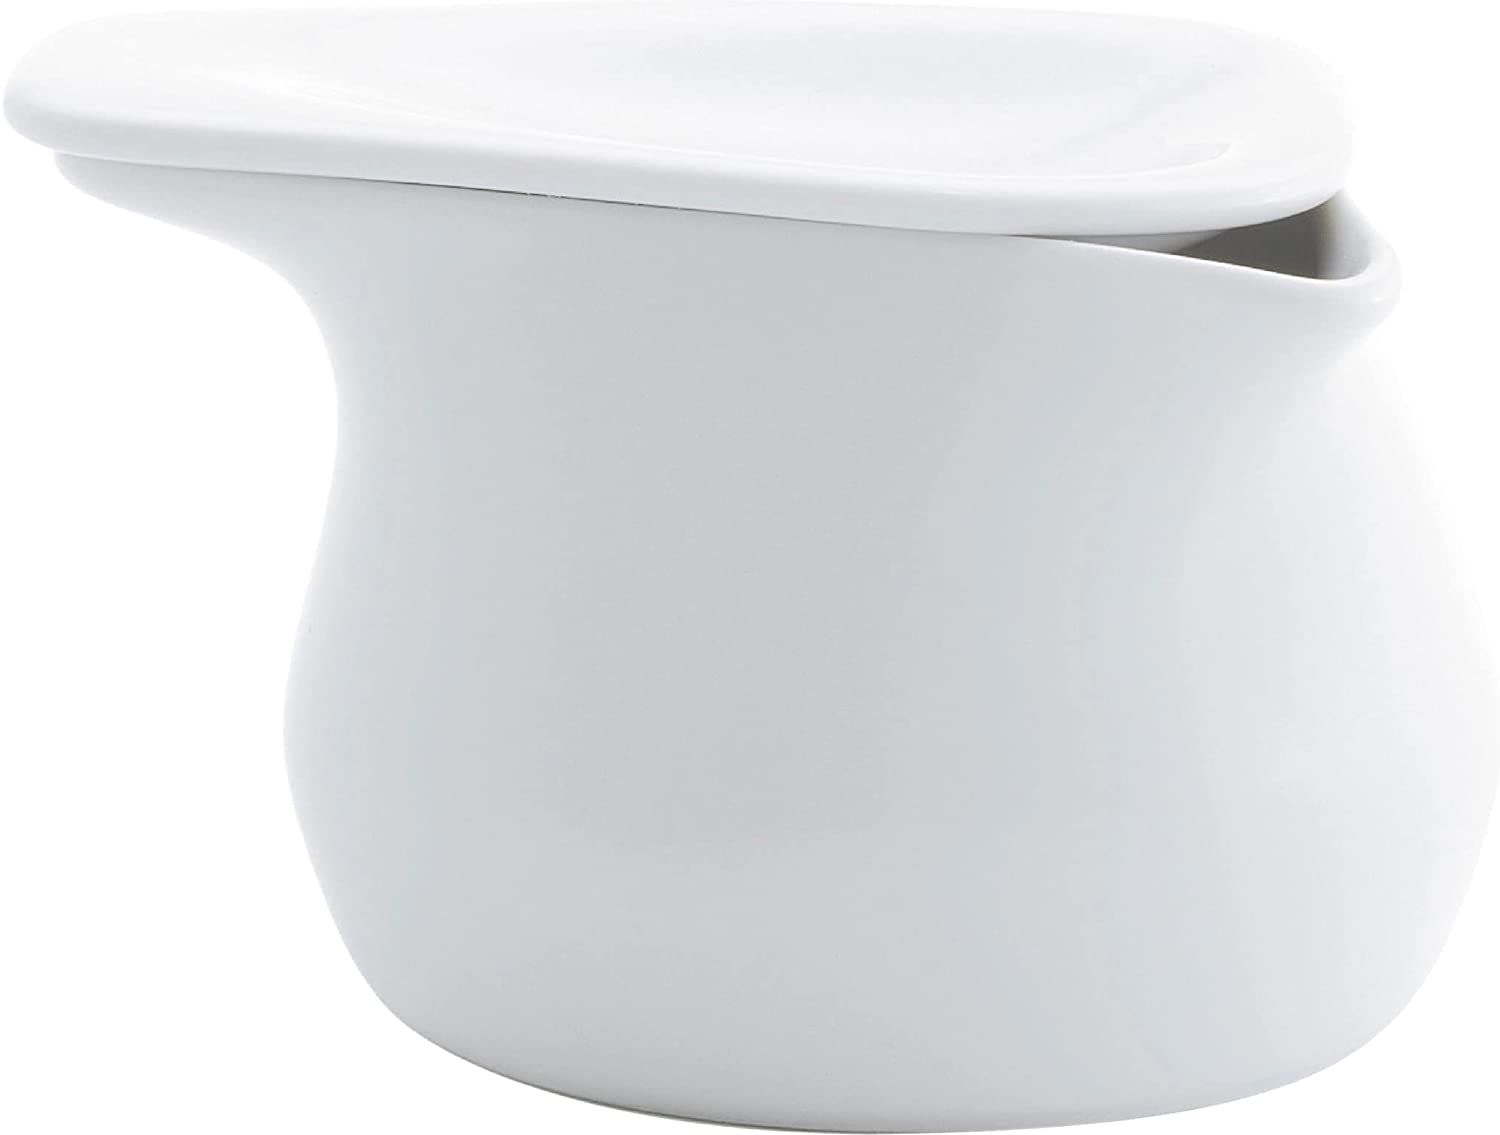 KAHLA Elixyr Bowl With Cover 8-1/2 oz, White Color, 1 Piece